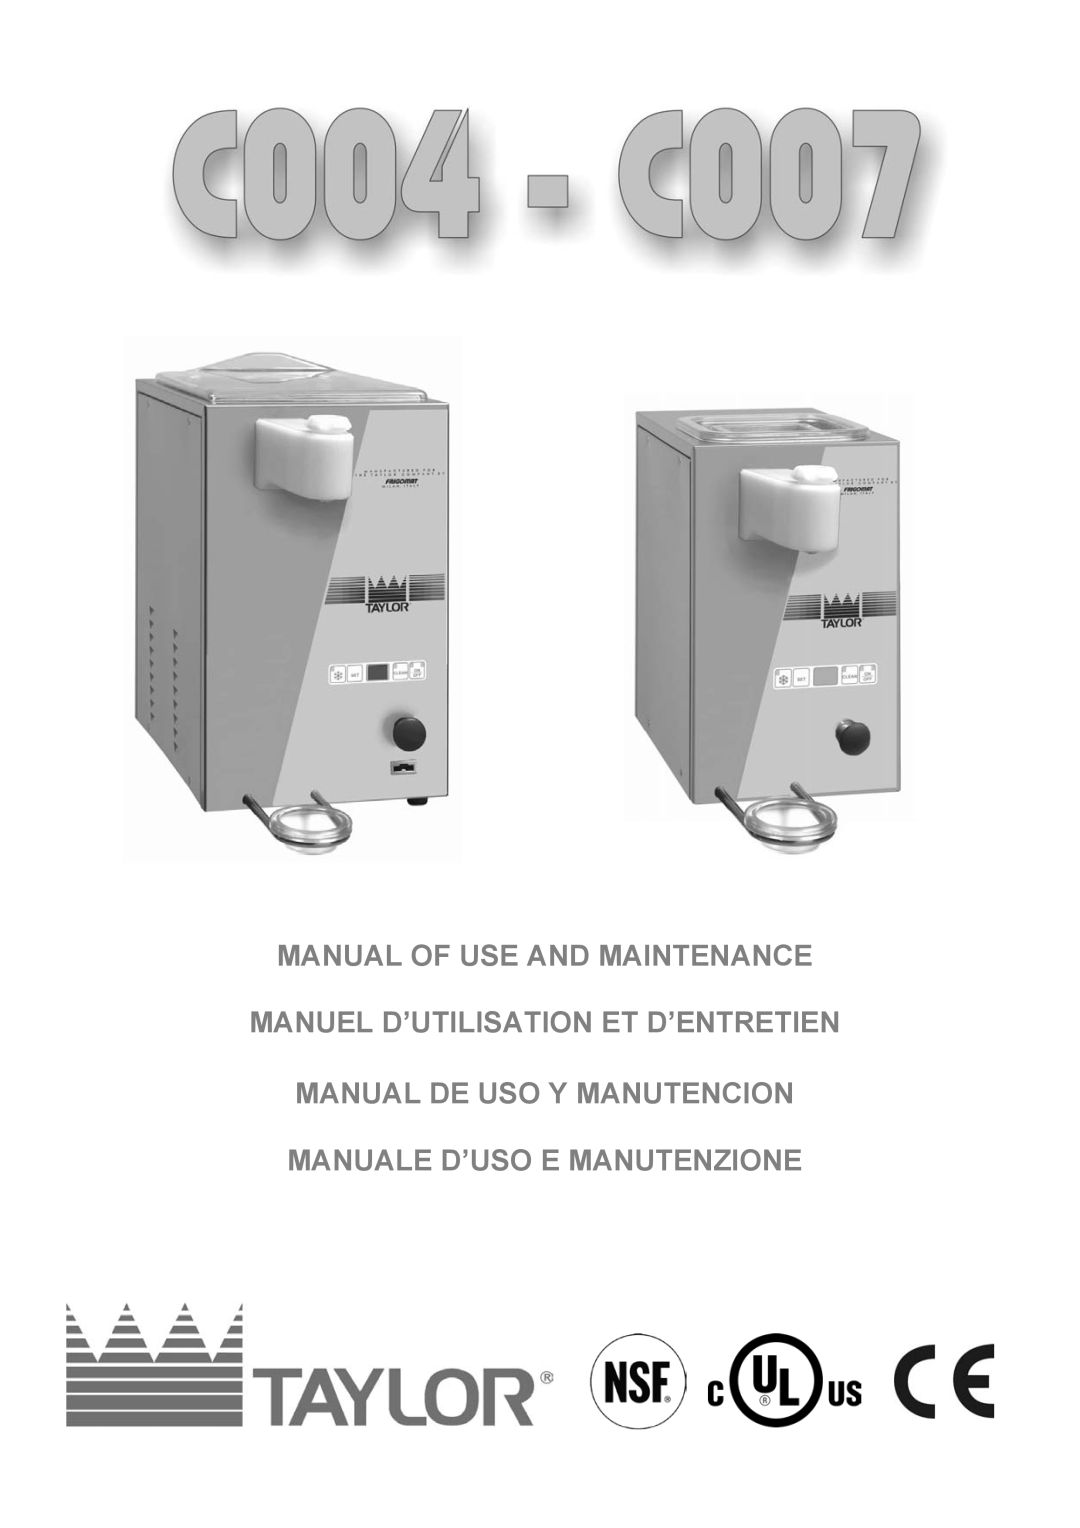 Taylor C004 - C007 manuel dutilisation Manual Of Use And Maintenance Manuel D’Utilisation Et D’Entretien 